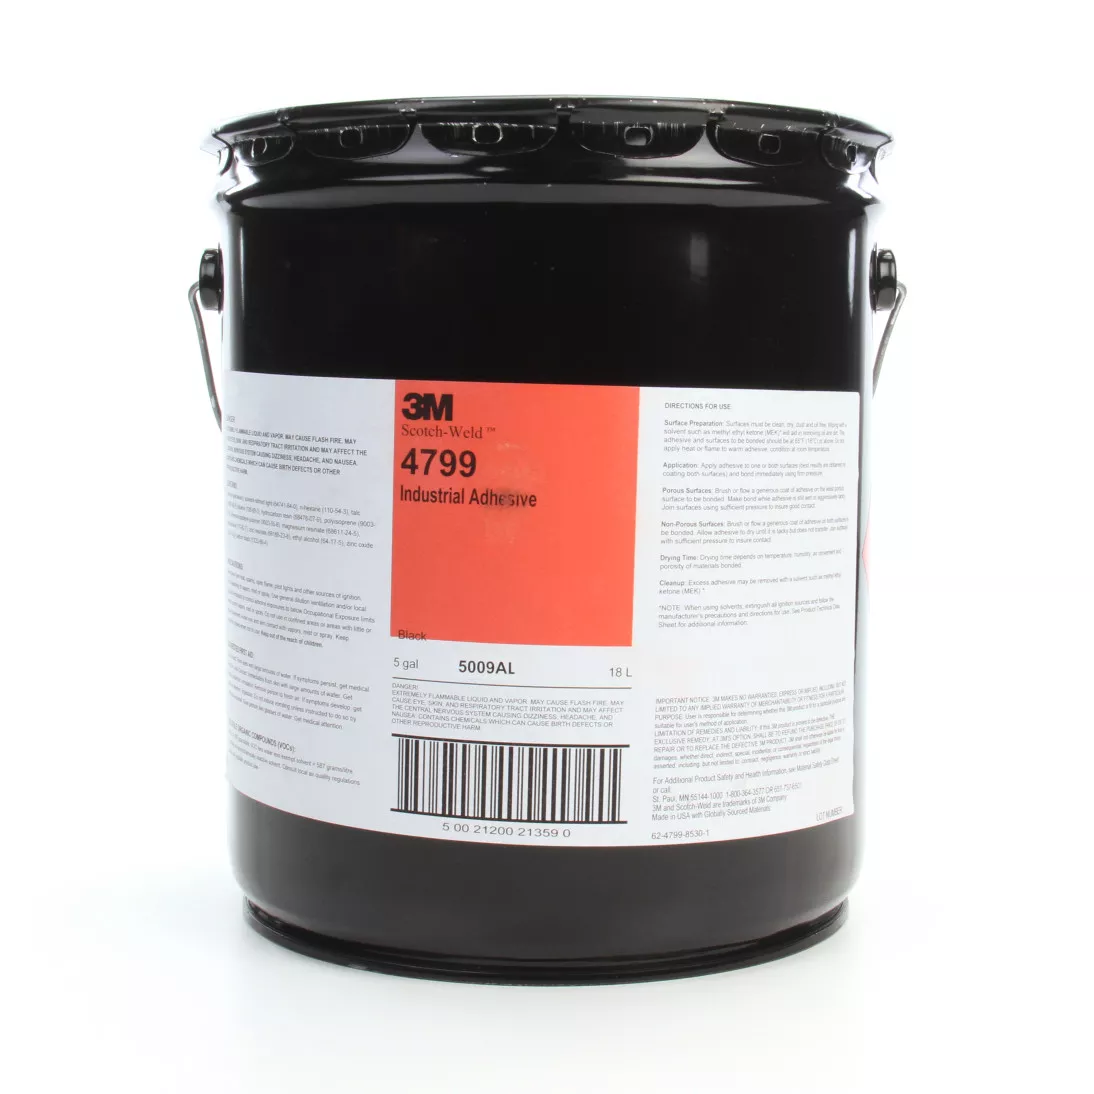 3M™ Industrial Adhesive 4799, Black, 5 Gallon Drum (Pail)